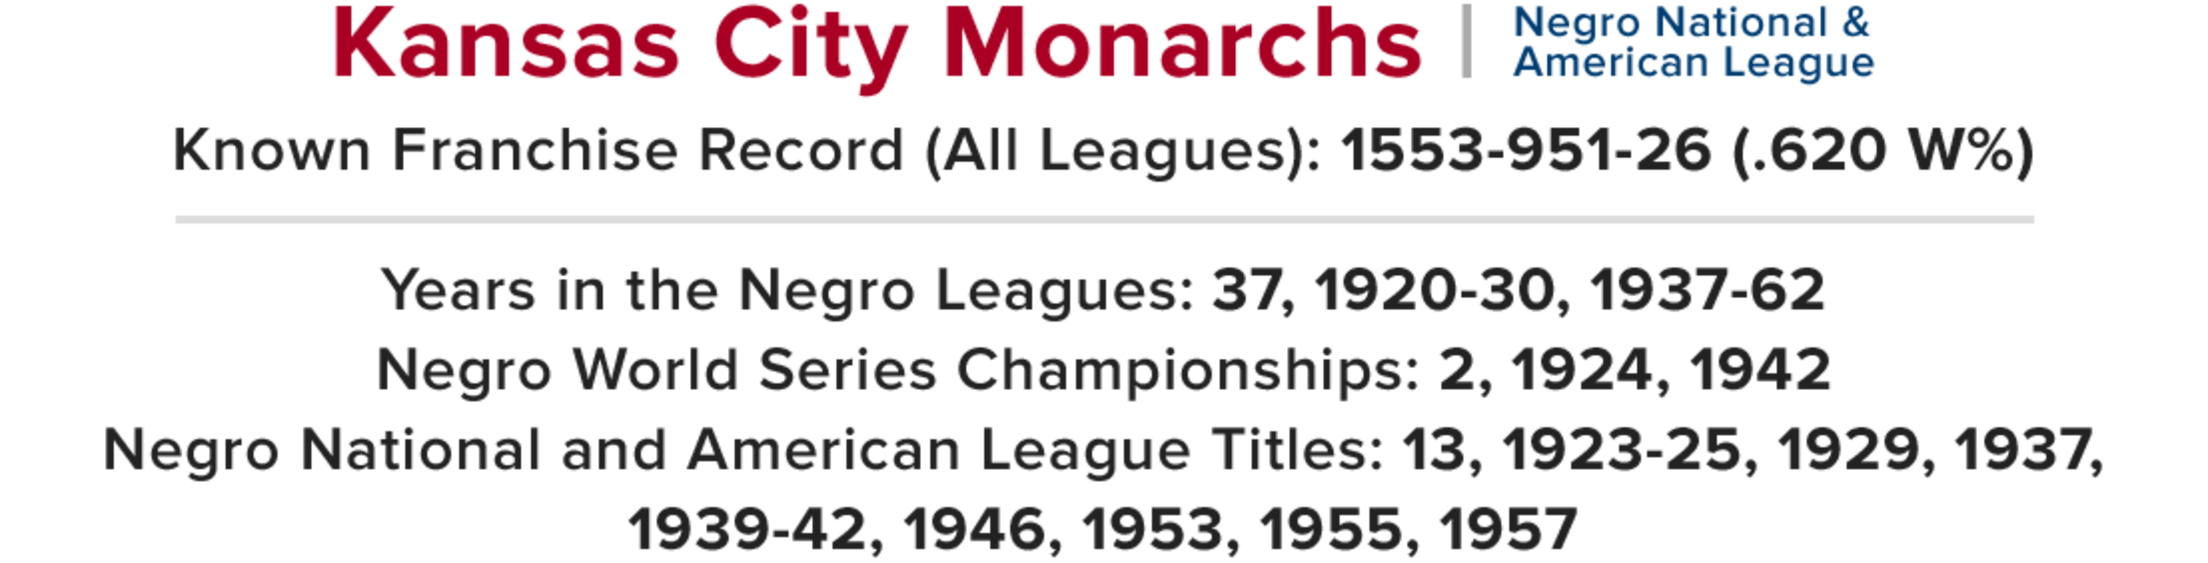 Kansas City Monarchs - Wikipedia